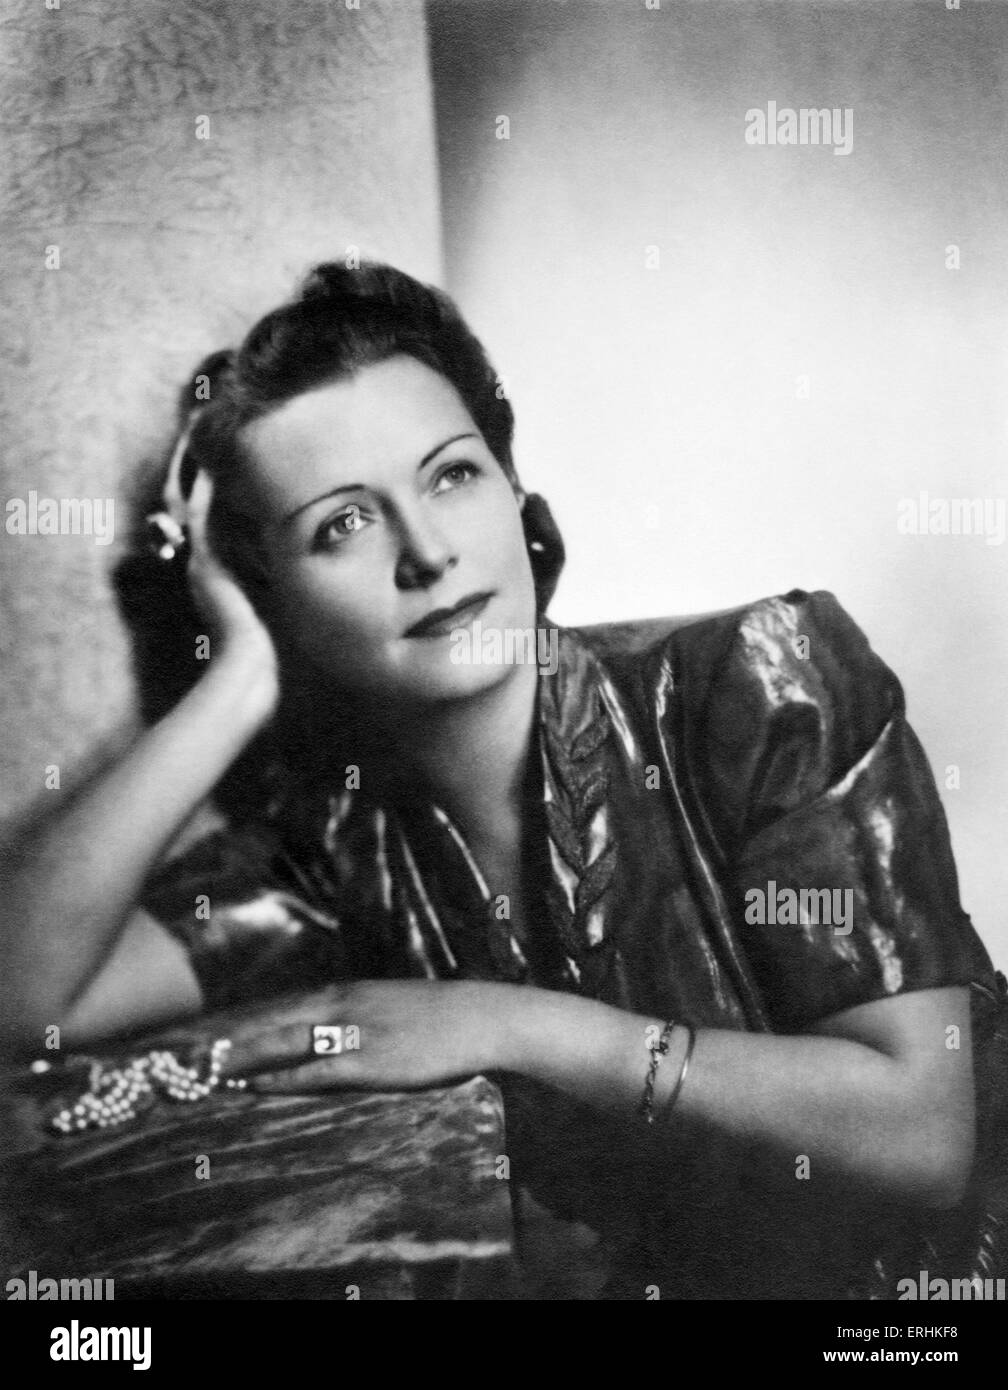 Olga Chekhova (or Tschechowa / Tchechowa ) - portrait of the Russian film actress. Born Olga Knipper, married Anton Chekhov 's Stock Photo